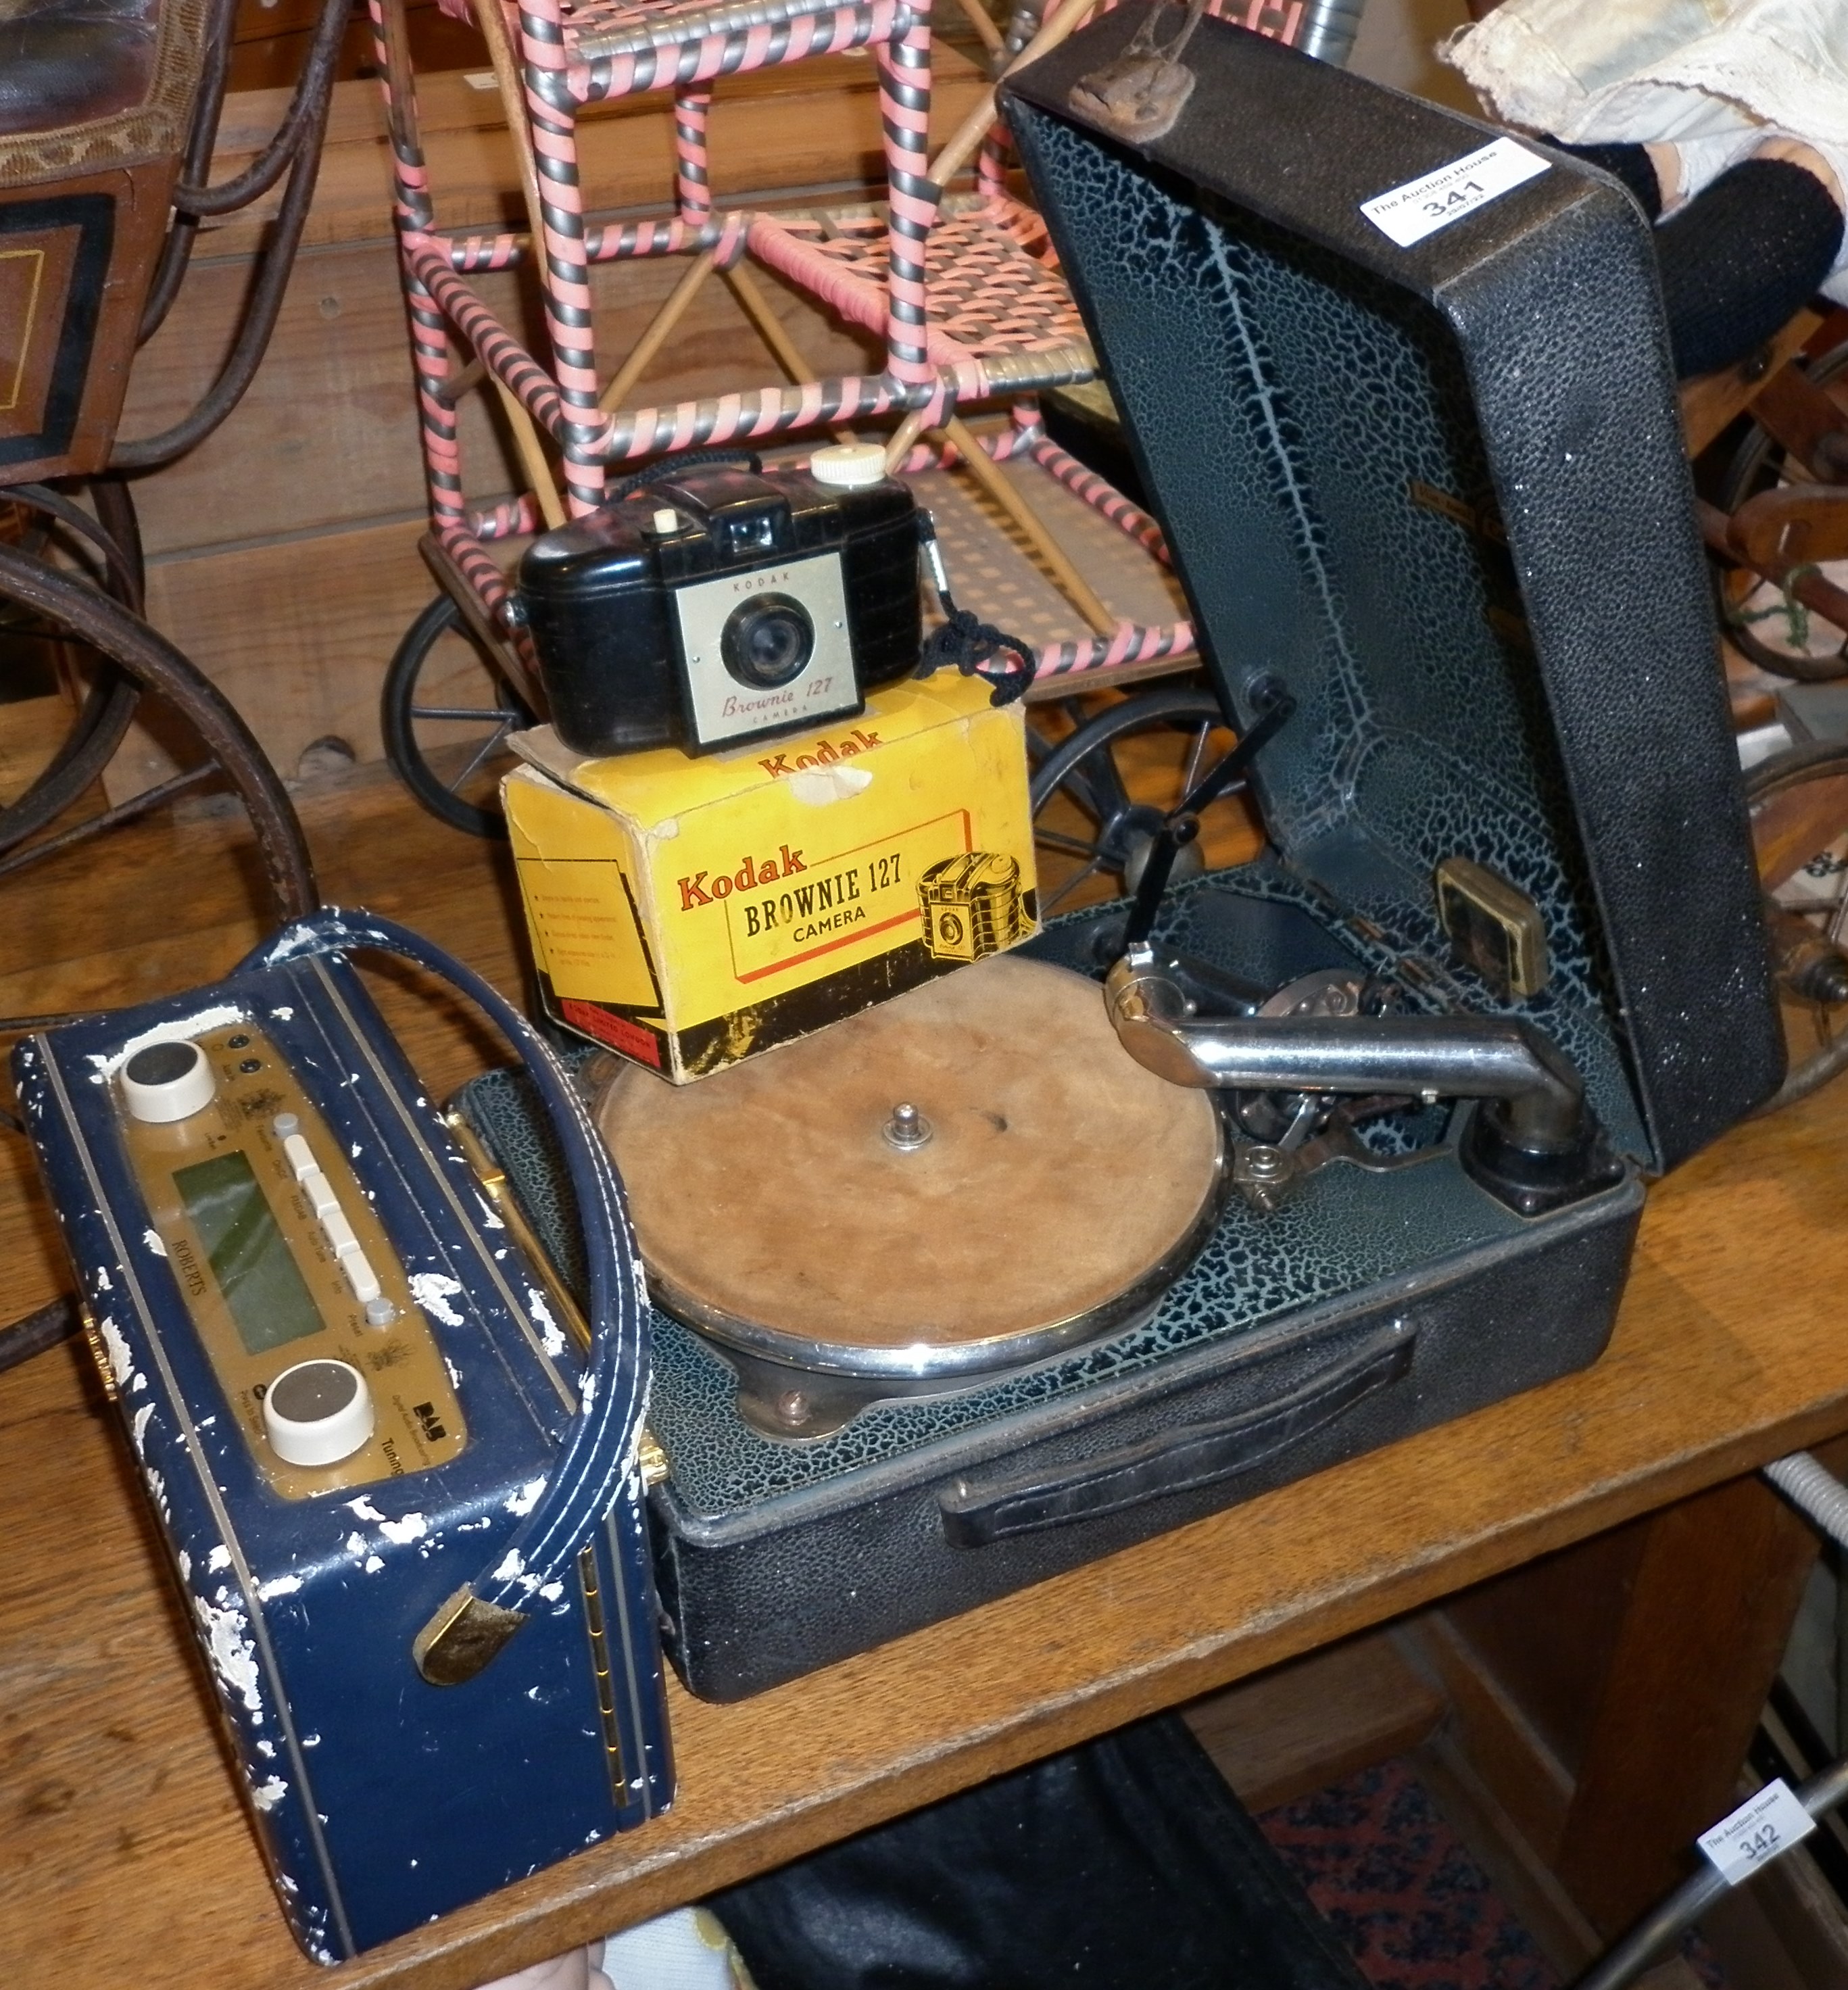 Columbia No 100 wind-up gramophone, A Roberts radio and a Kodak Brownie 127 camera